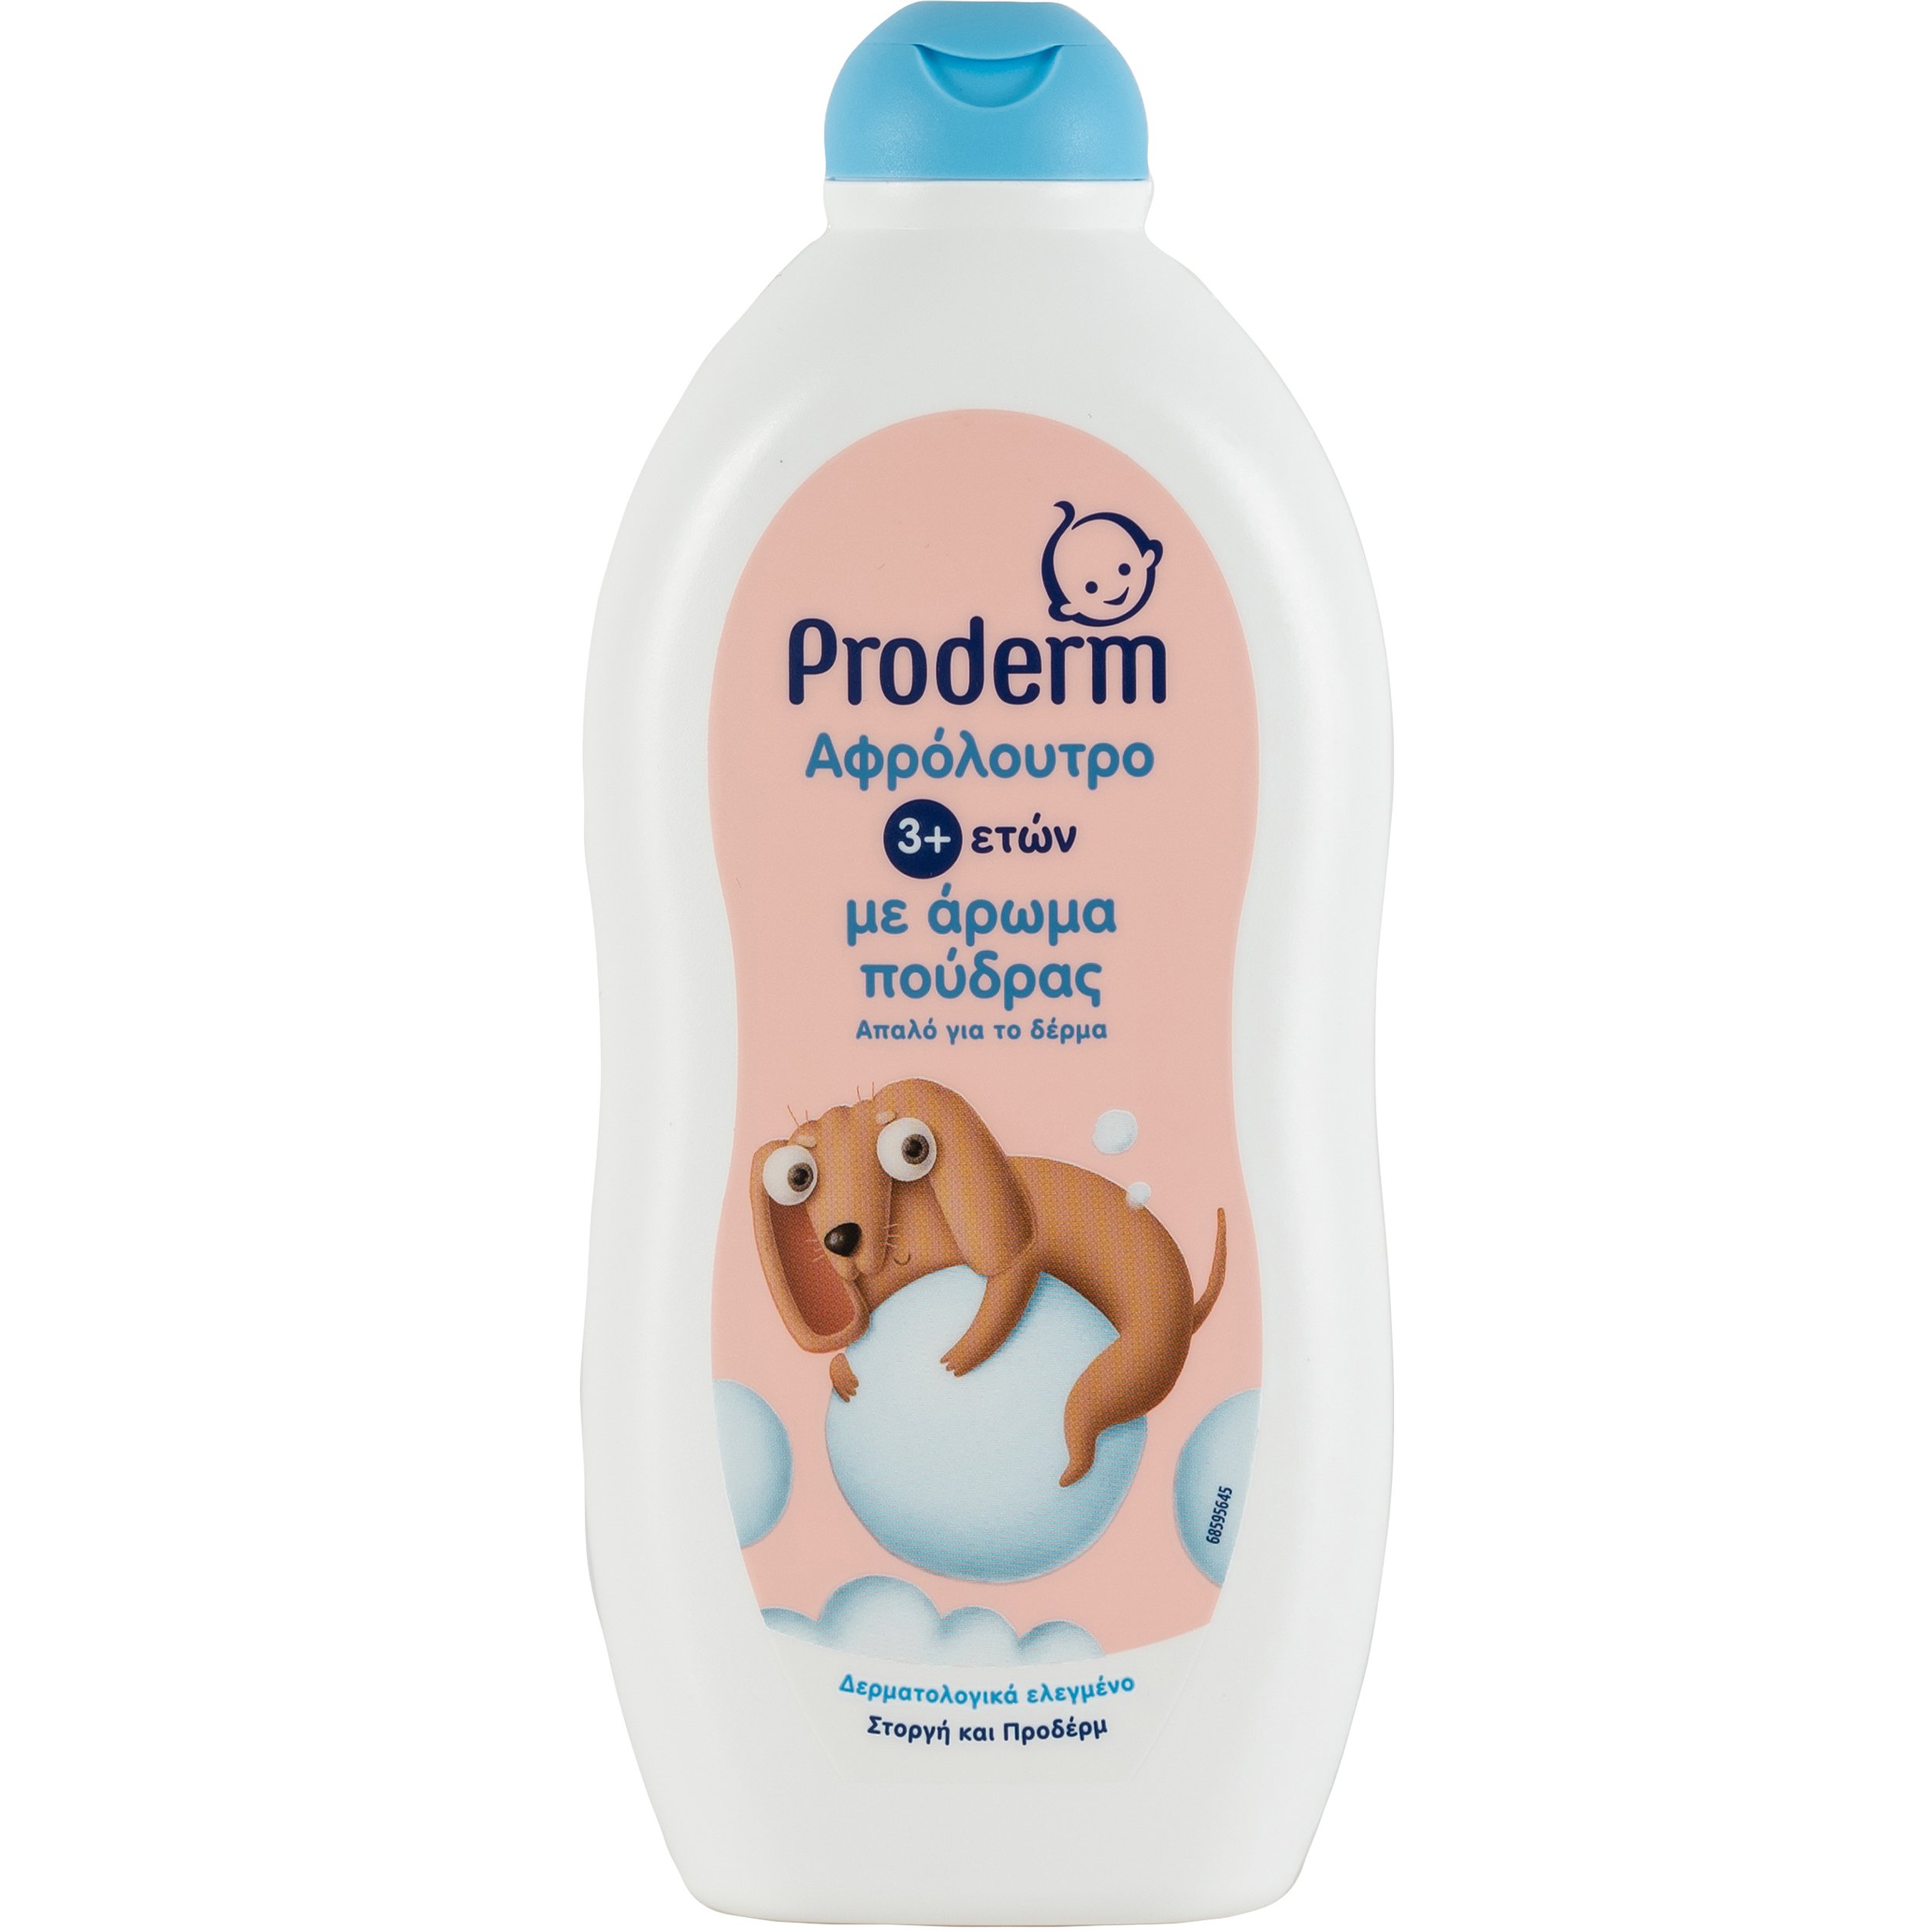 Proderm Proderm Kids Shower Gel Παιδικό Αφρόλουτρο Απαλό για το Δέρμα με Άρωμα Πούδρας 3+ Years 500ml